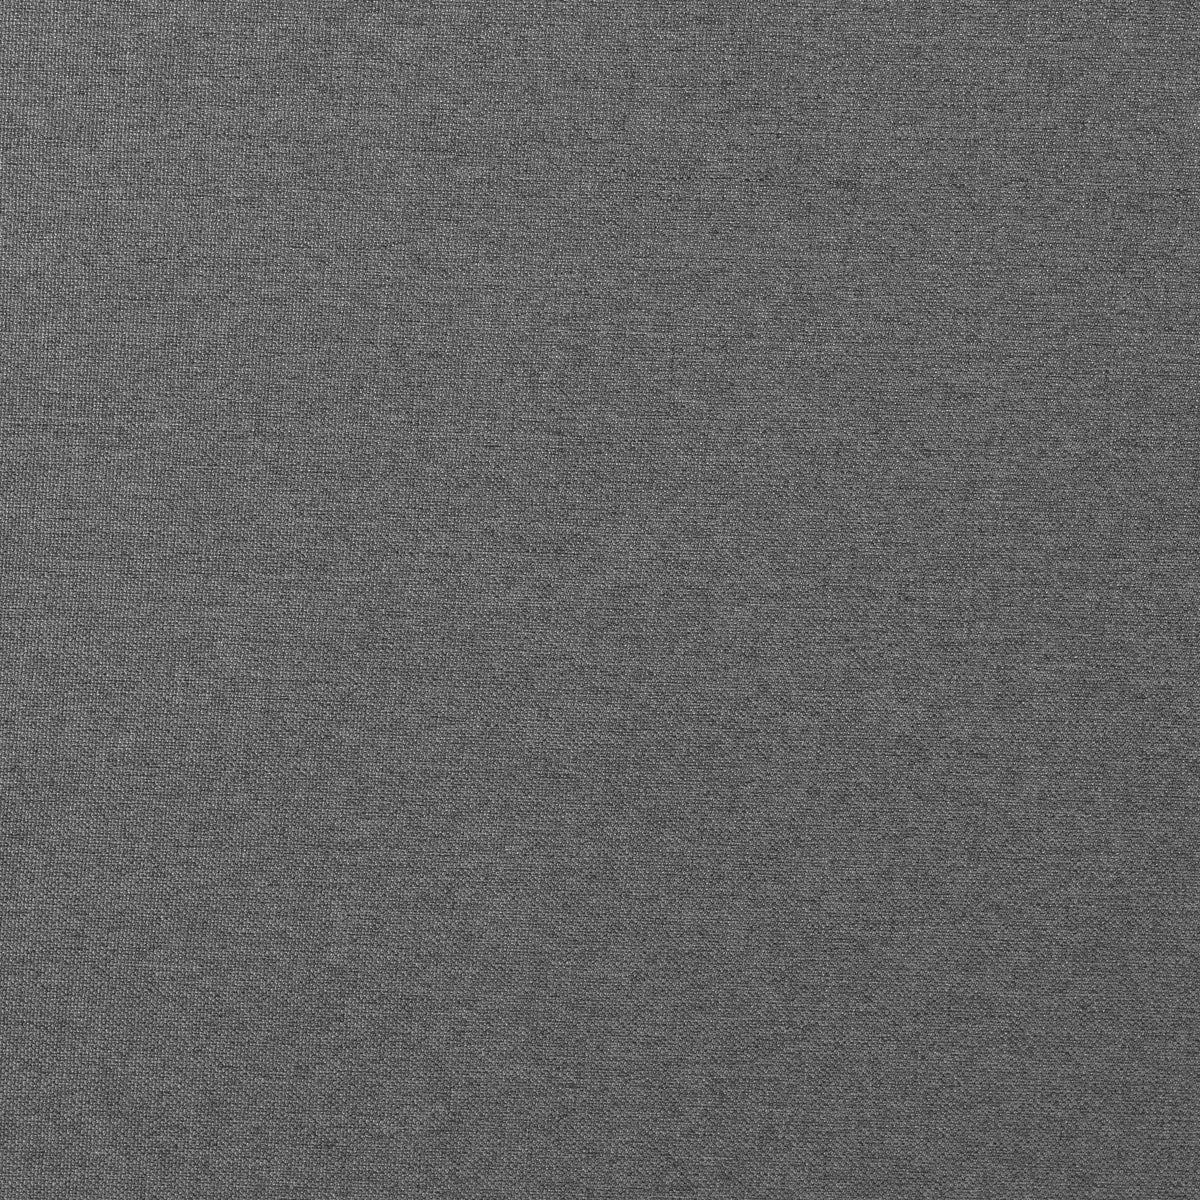 Dark Gray,Full |#| Full Size Upholstered Metal Panel Headboard in Dark Gray Fabric